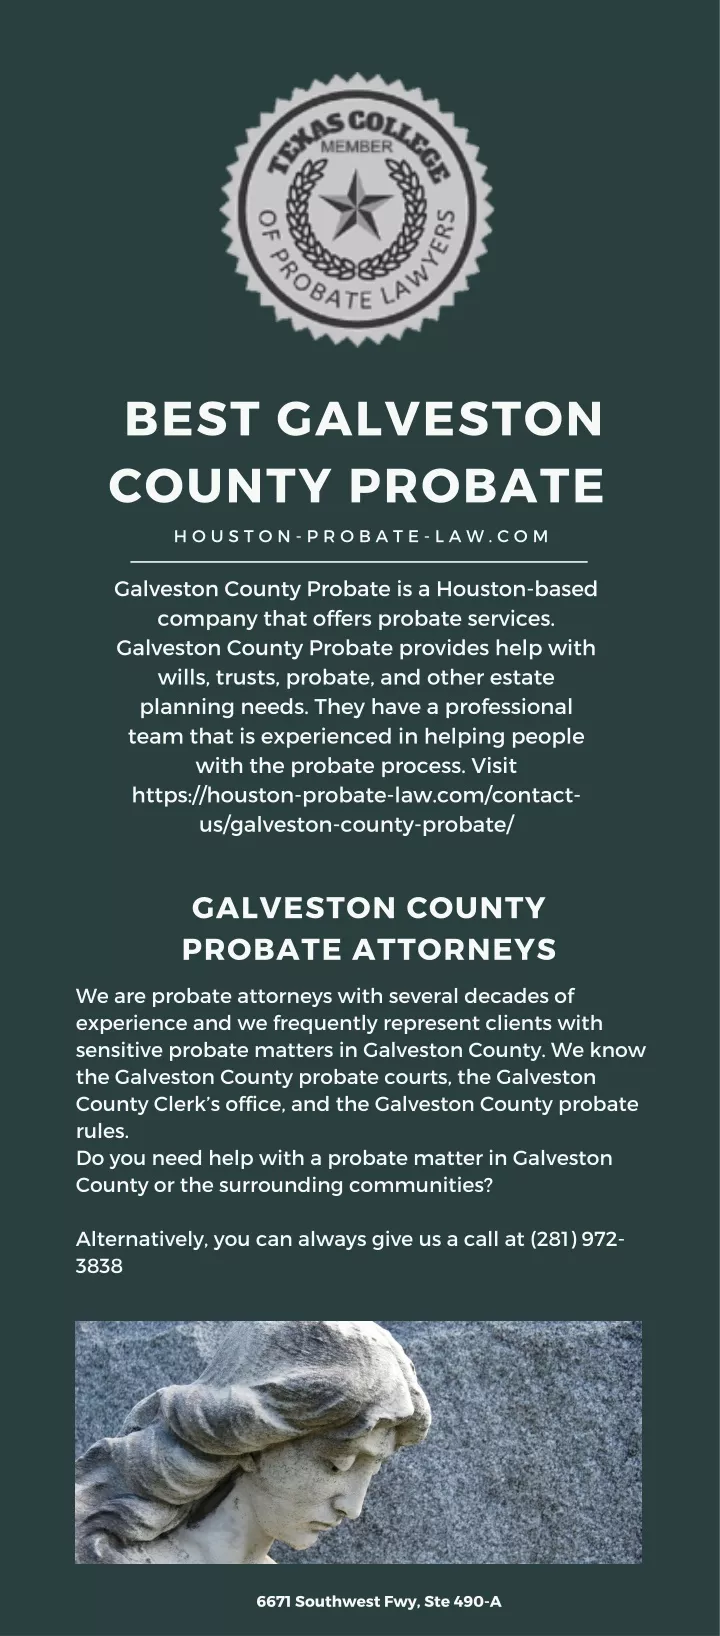 PPT Best Galveston County Probate Houston probate law com